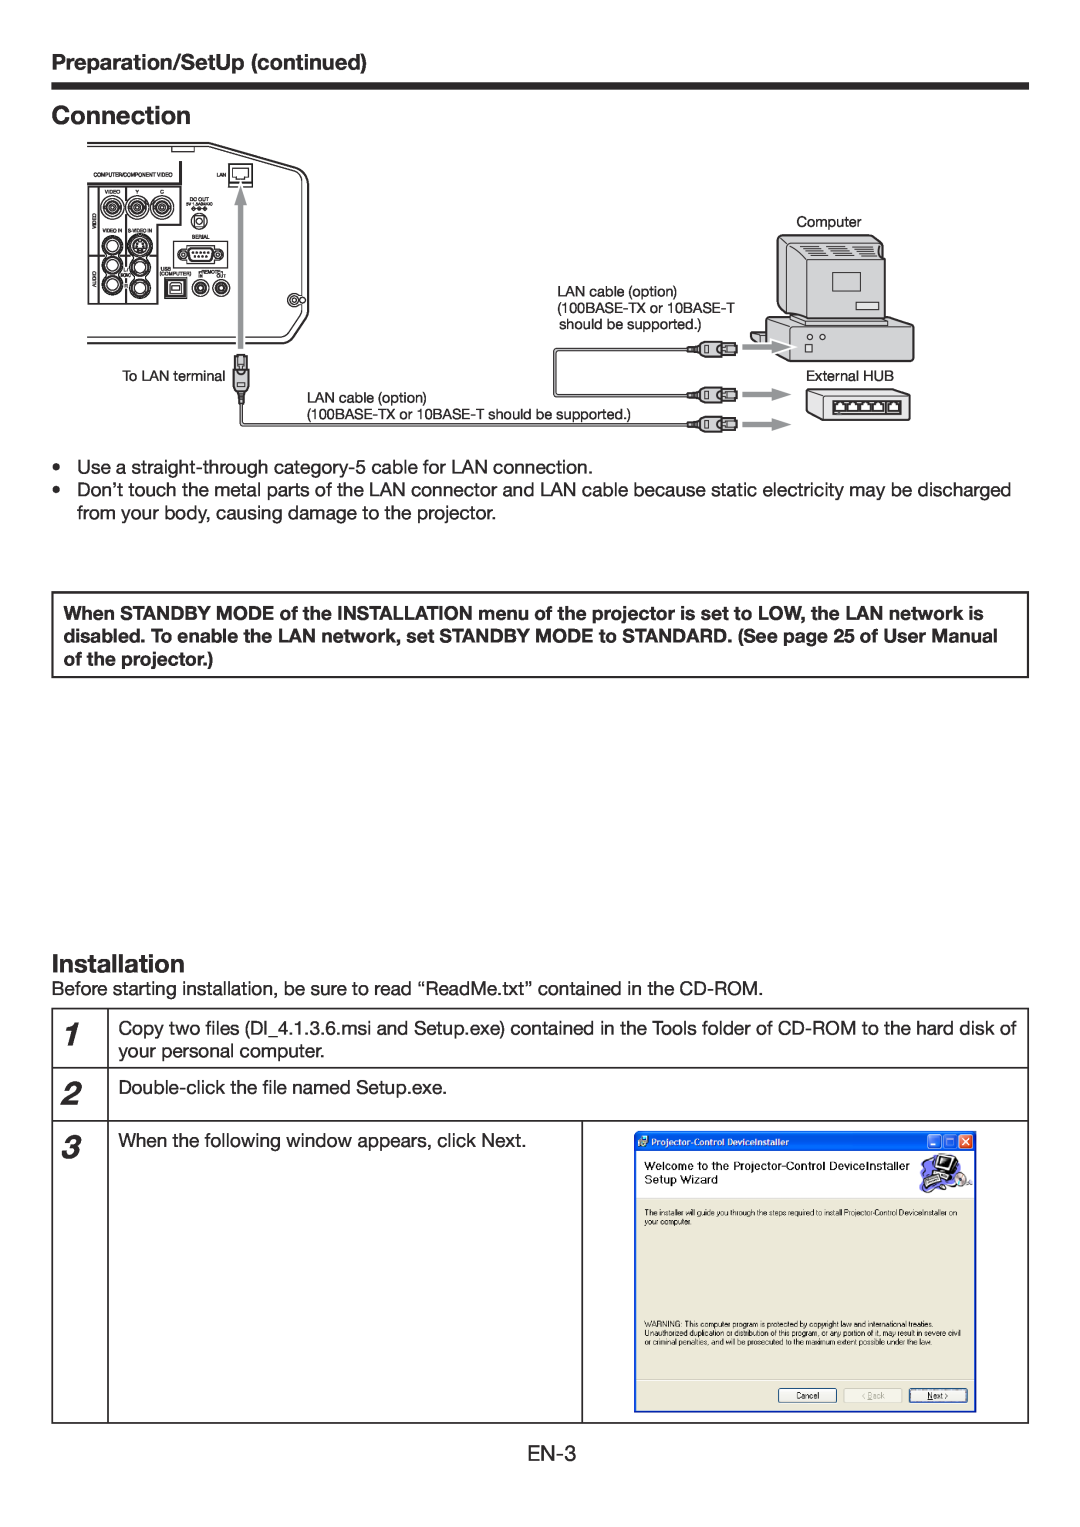 Mitsubishi Electronics XD3200U user manual Connection, Installation, Preparation/SetUp continued, EN-3 